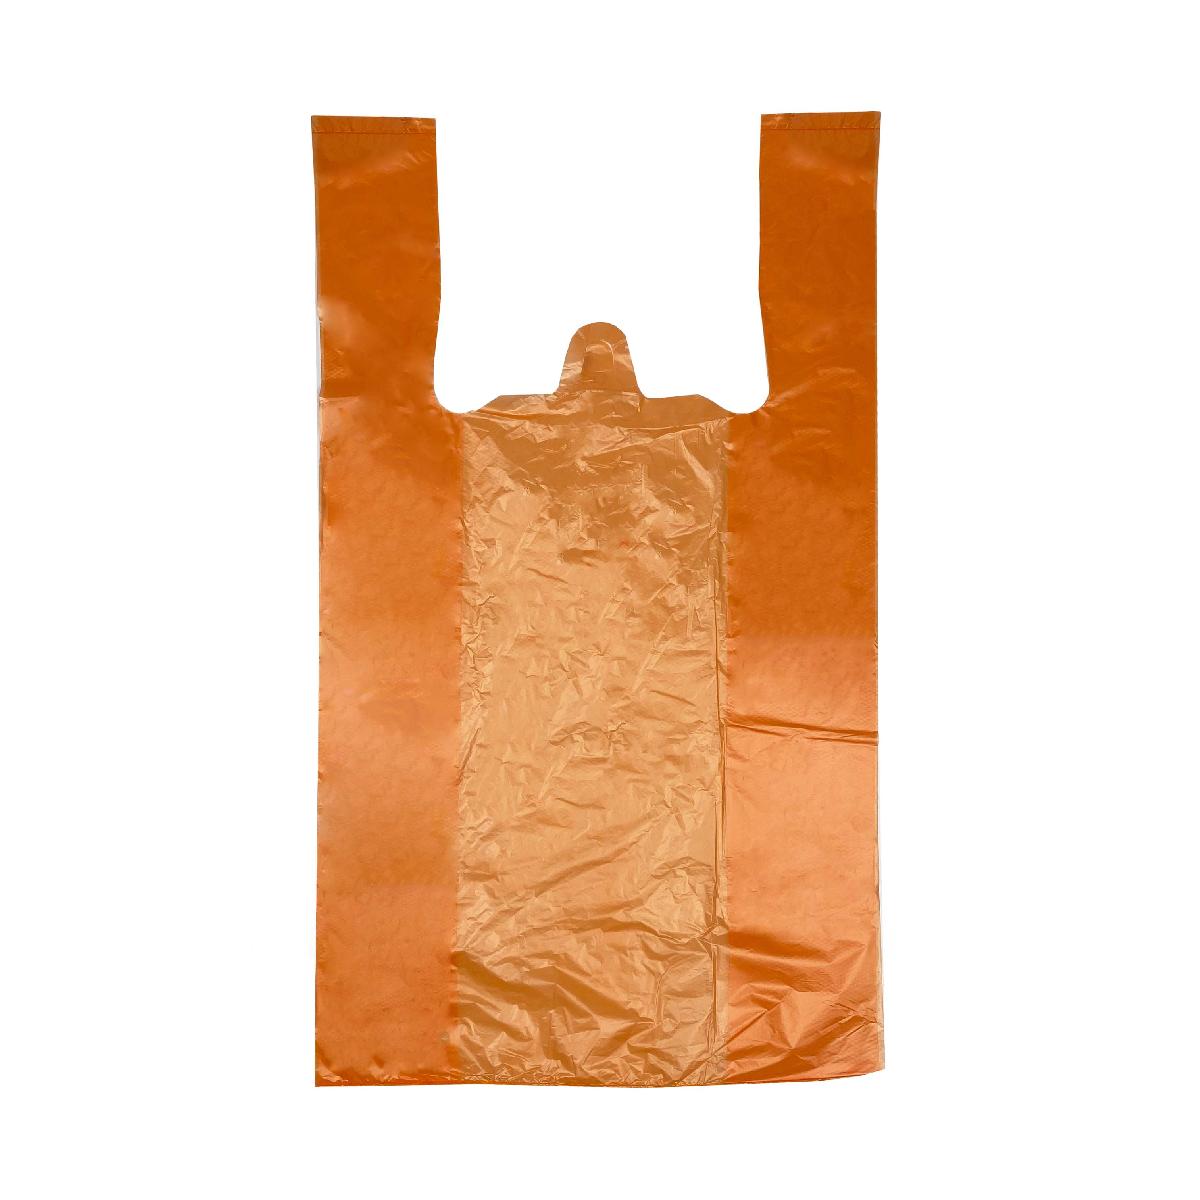 Пакет-майка без печати оранжевый 24+14*44 13мкр (100/2000)